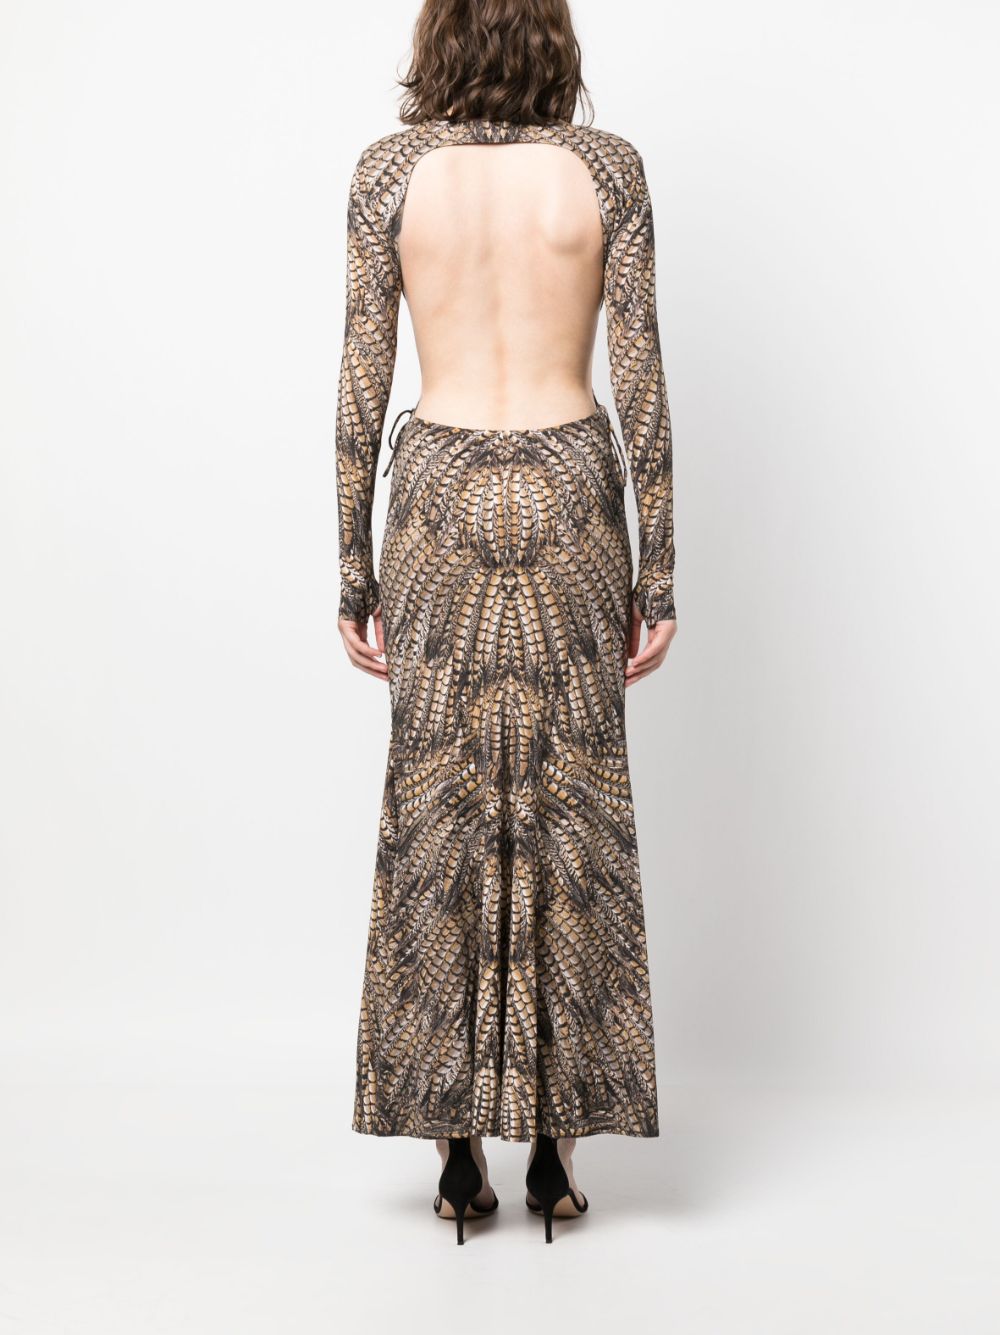 Roberto Cavalli Cut Out Patterned Dress Farfetch